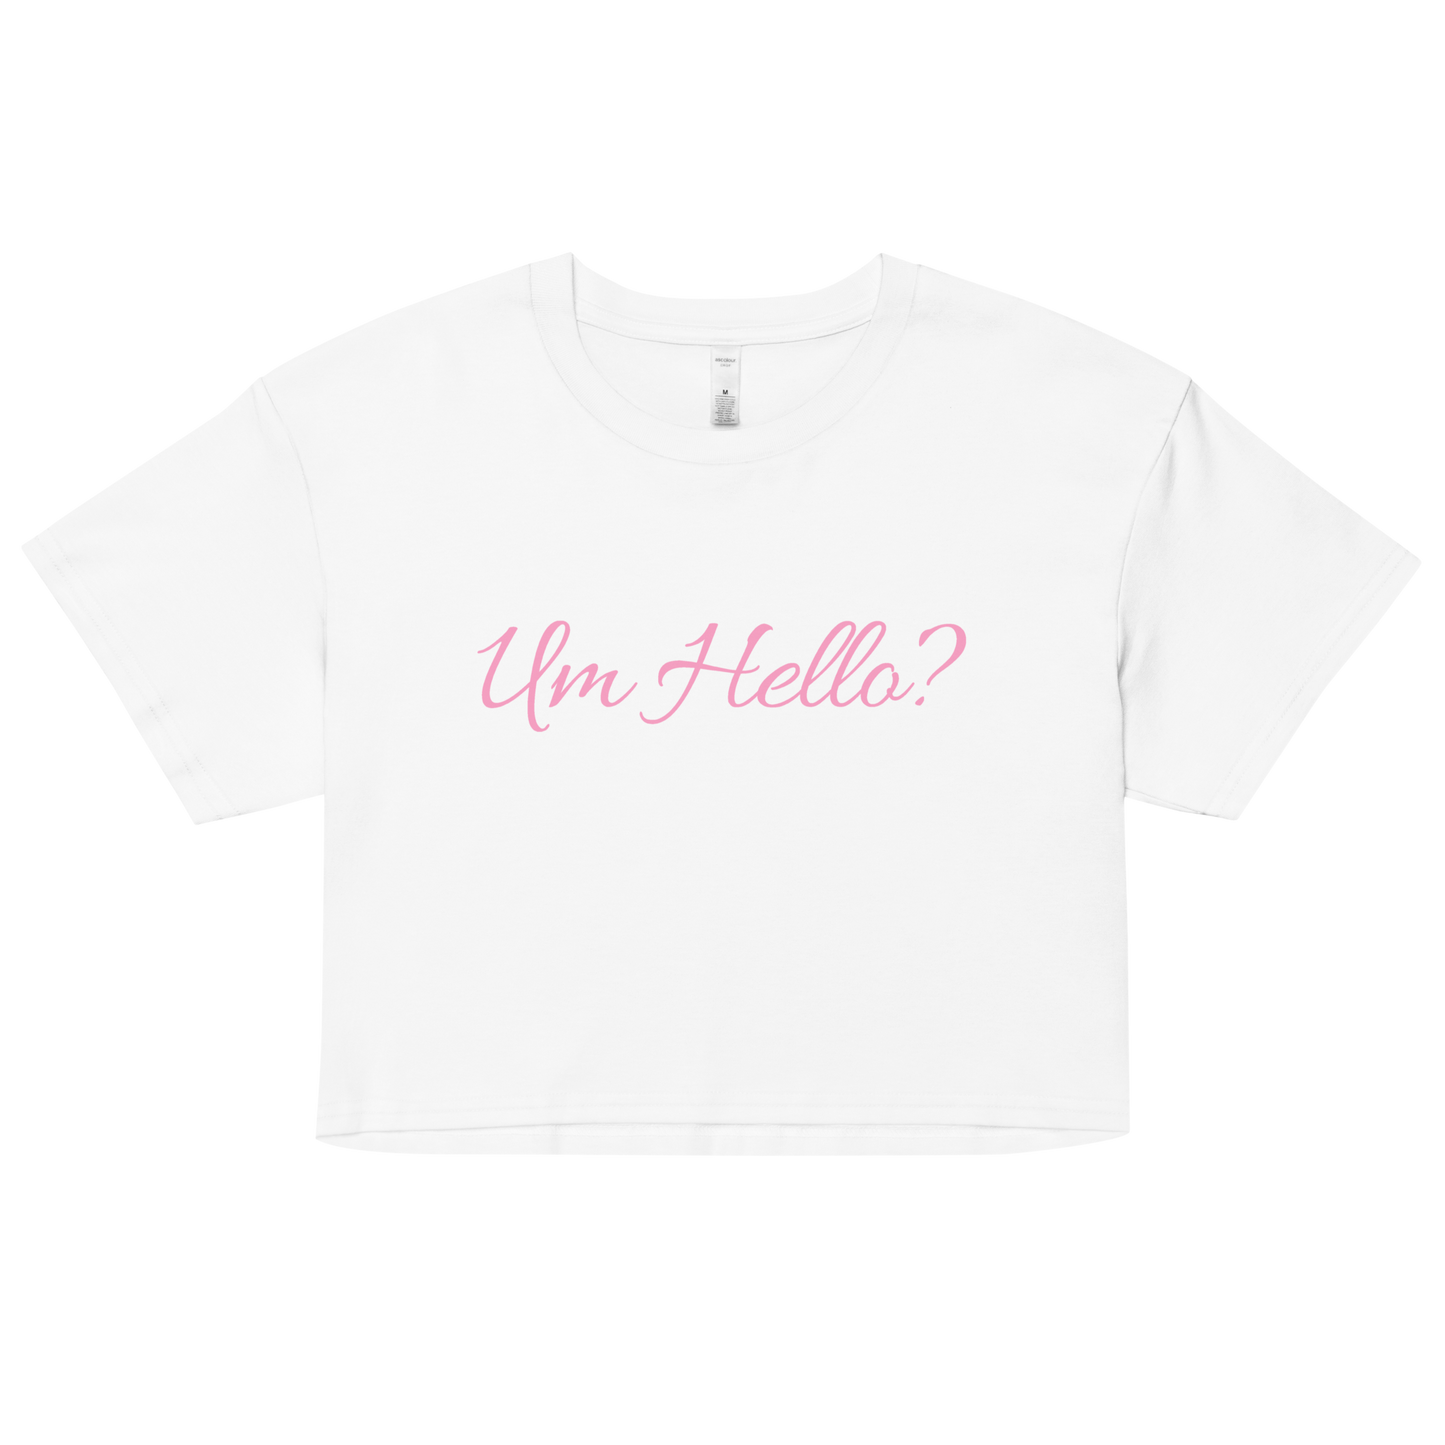 Um Hello? Relaxed Crop - Angelina Pivarnick Merchandise